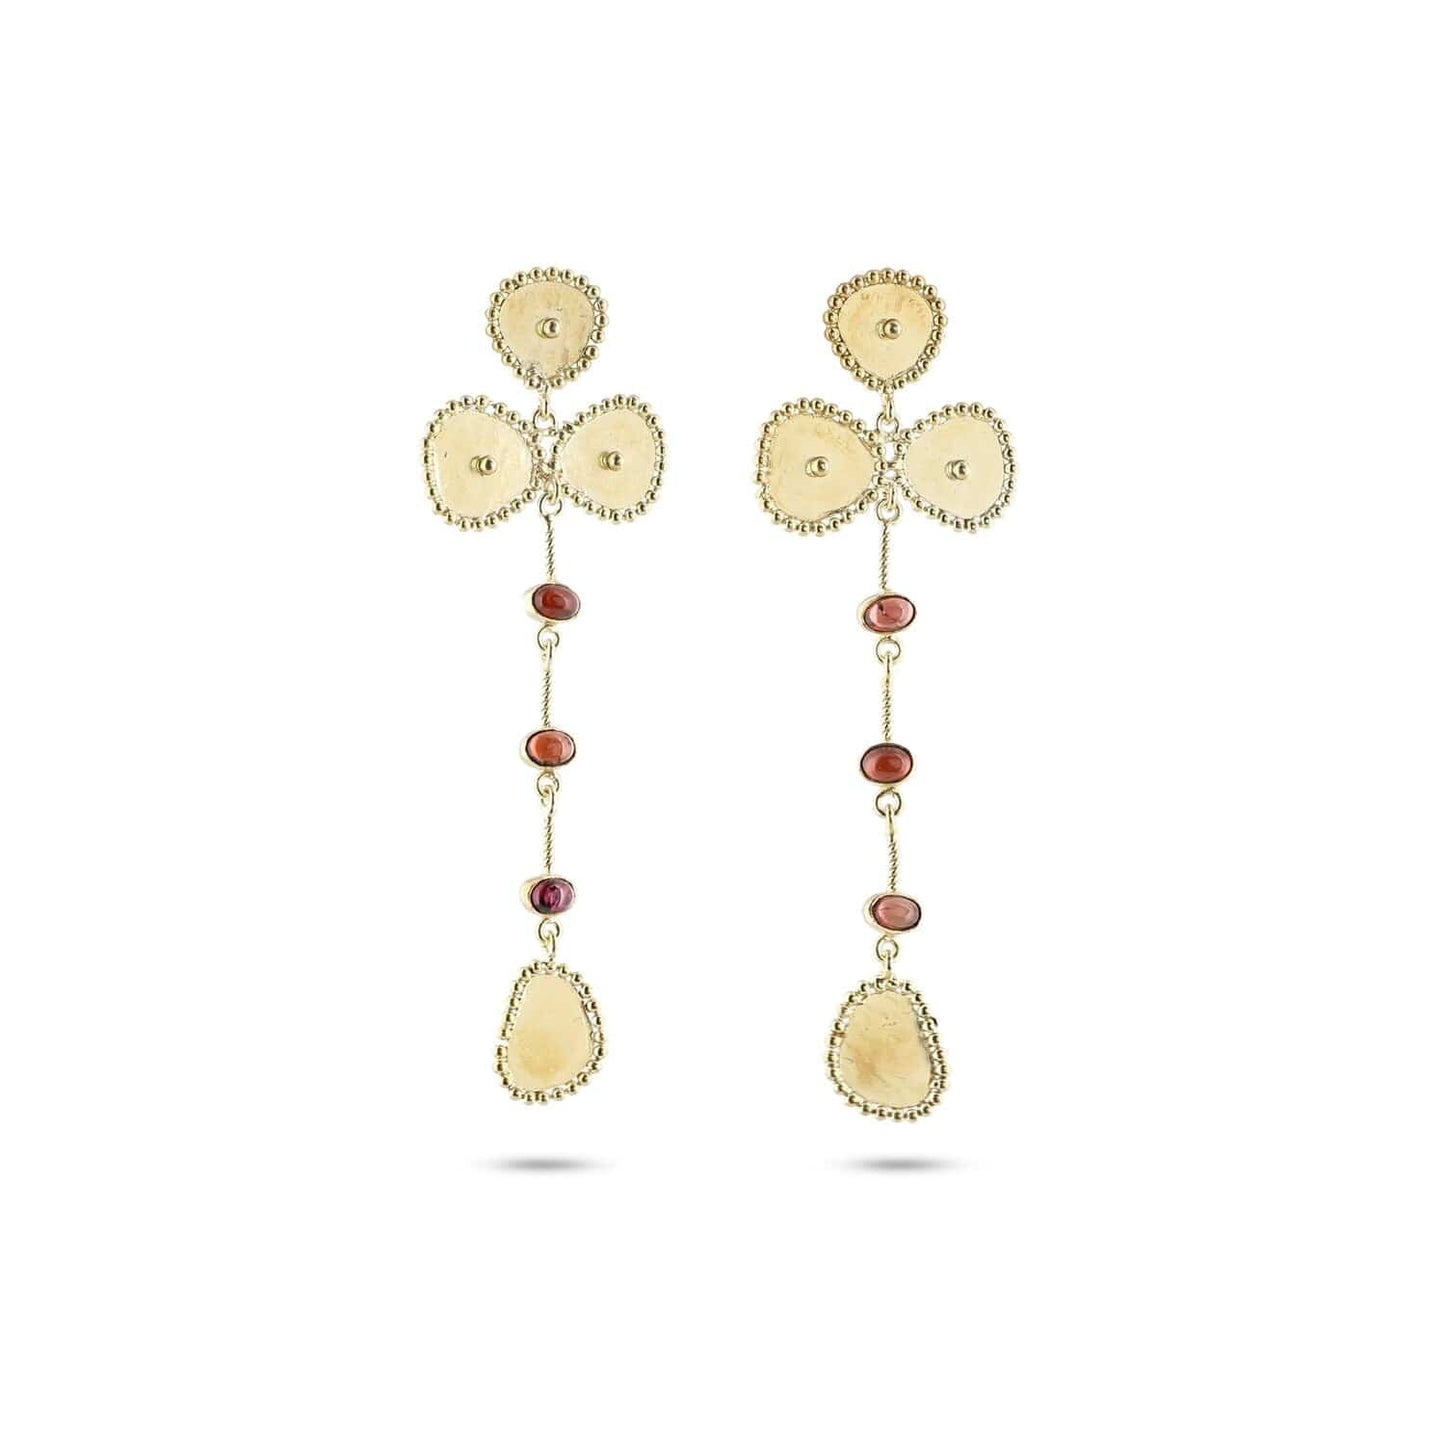 Christine Bekaert Jewelry Earring Flor